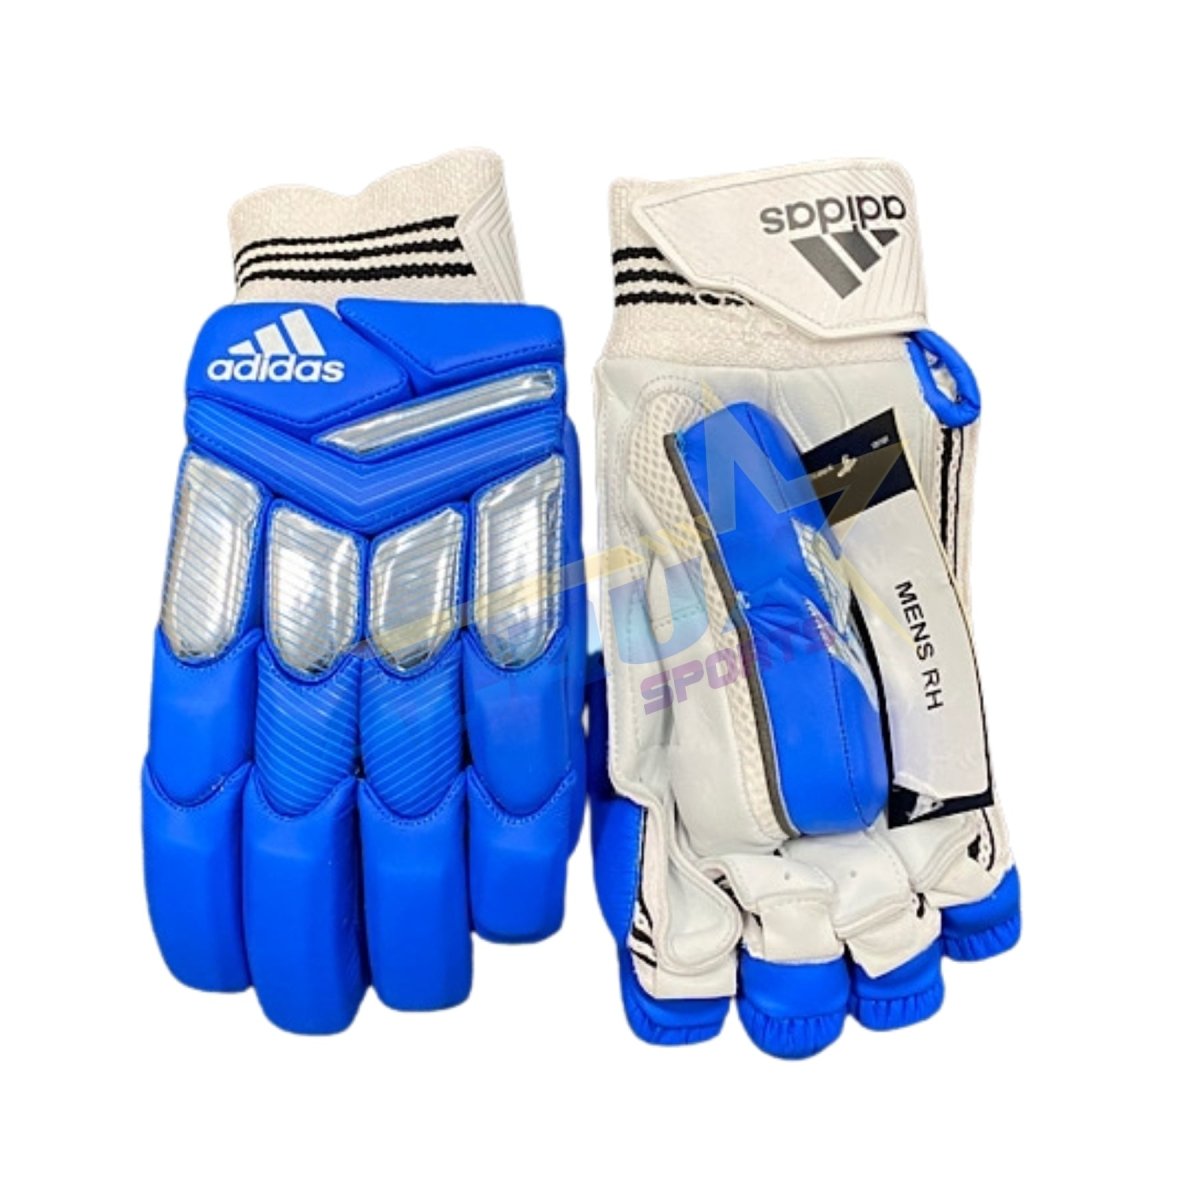 Adidas XT LE Coloured Cricket Batting Gloves - Acrux Sports